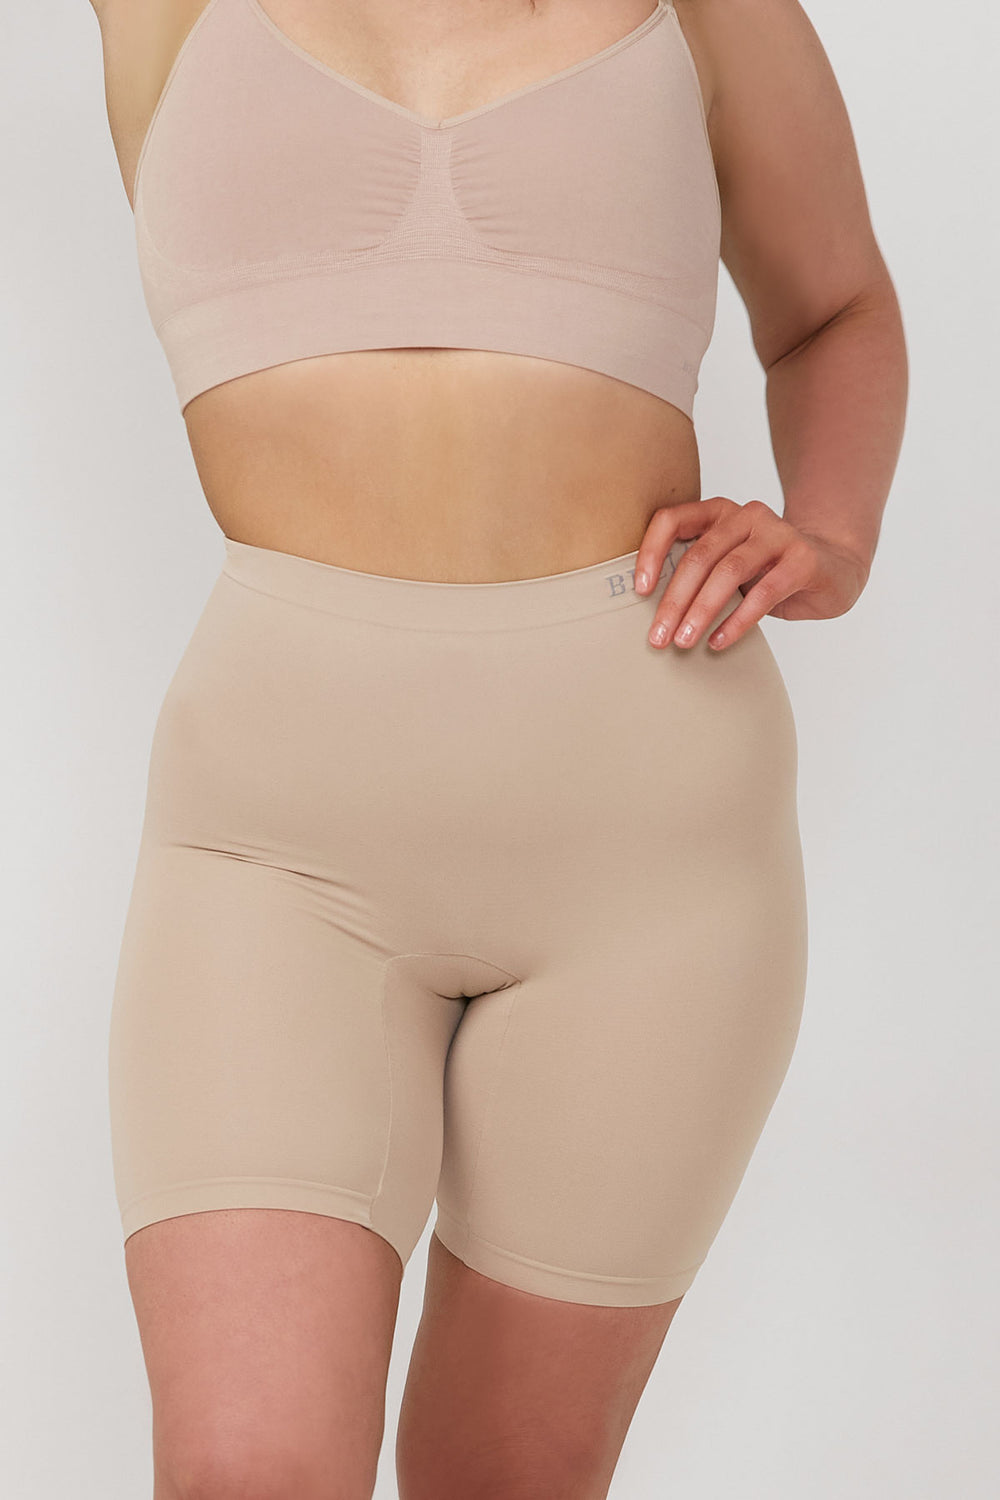 Women's anti-chafing underwear shorts Australia | Bella Bodies Australia | Coolfit Everday Anti Chafing Shorts | Sand | Front